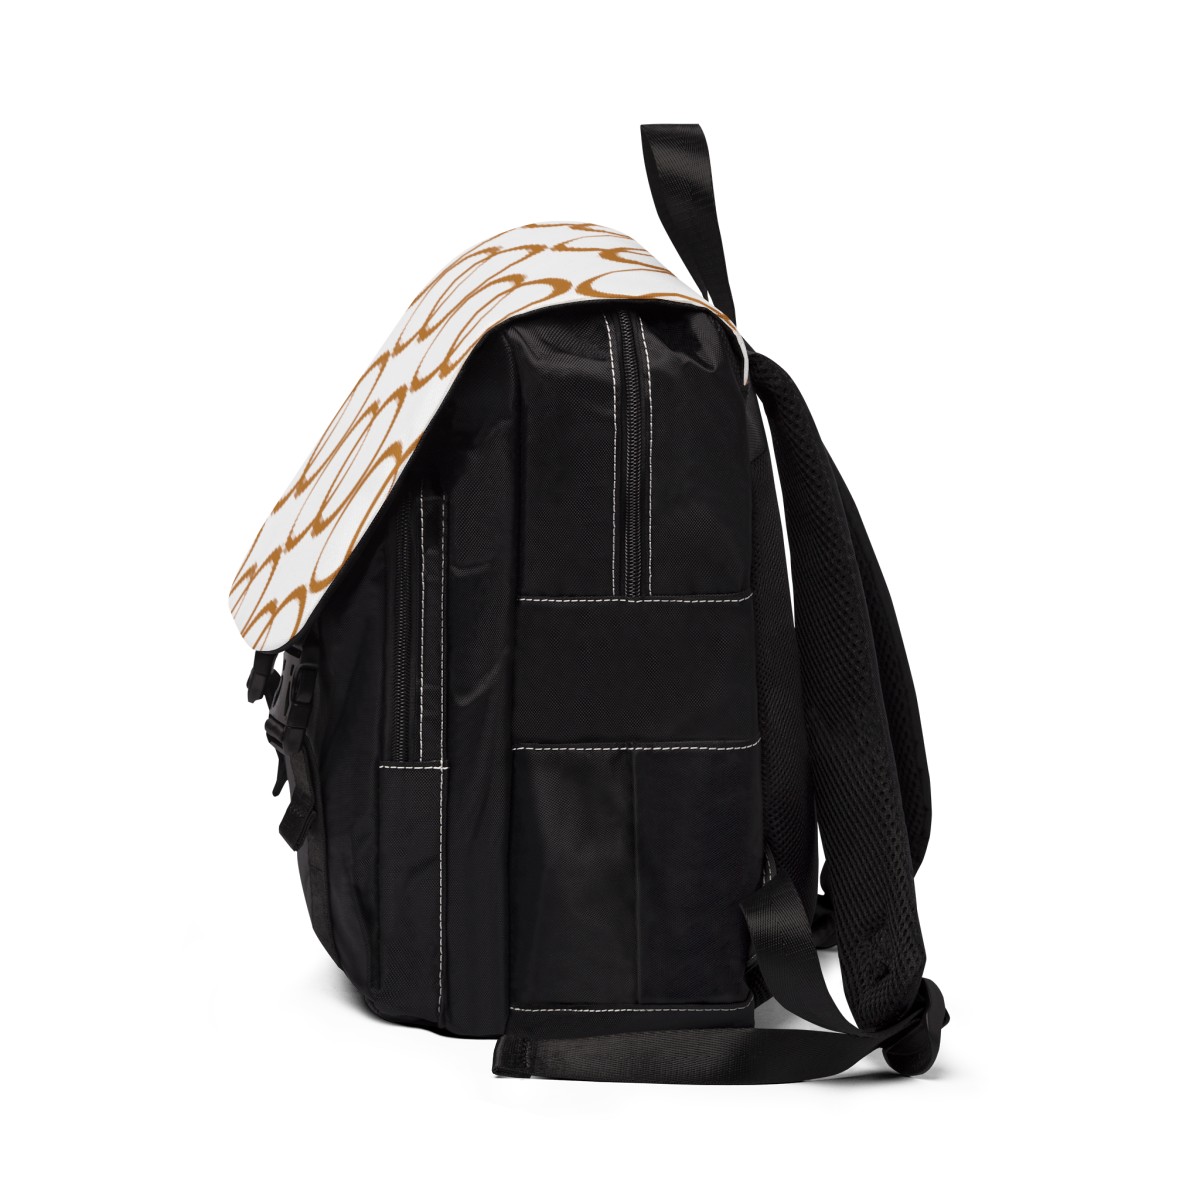 Unisex Backpack Circles Gold product thumbnail image